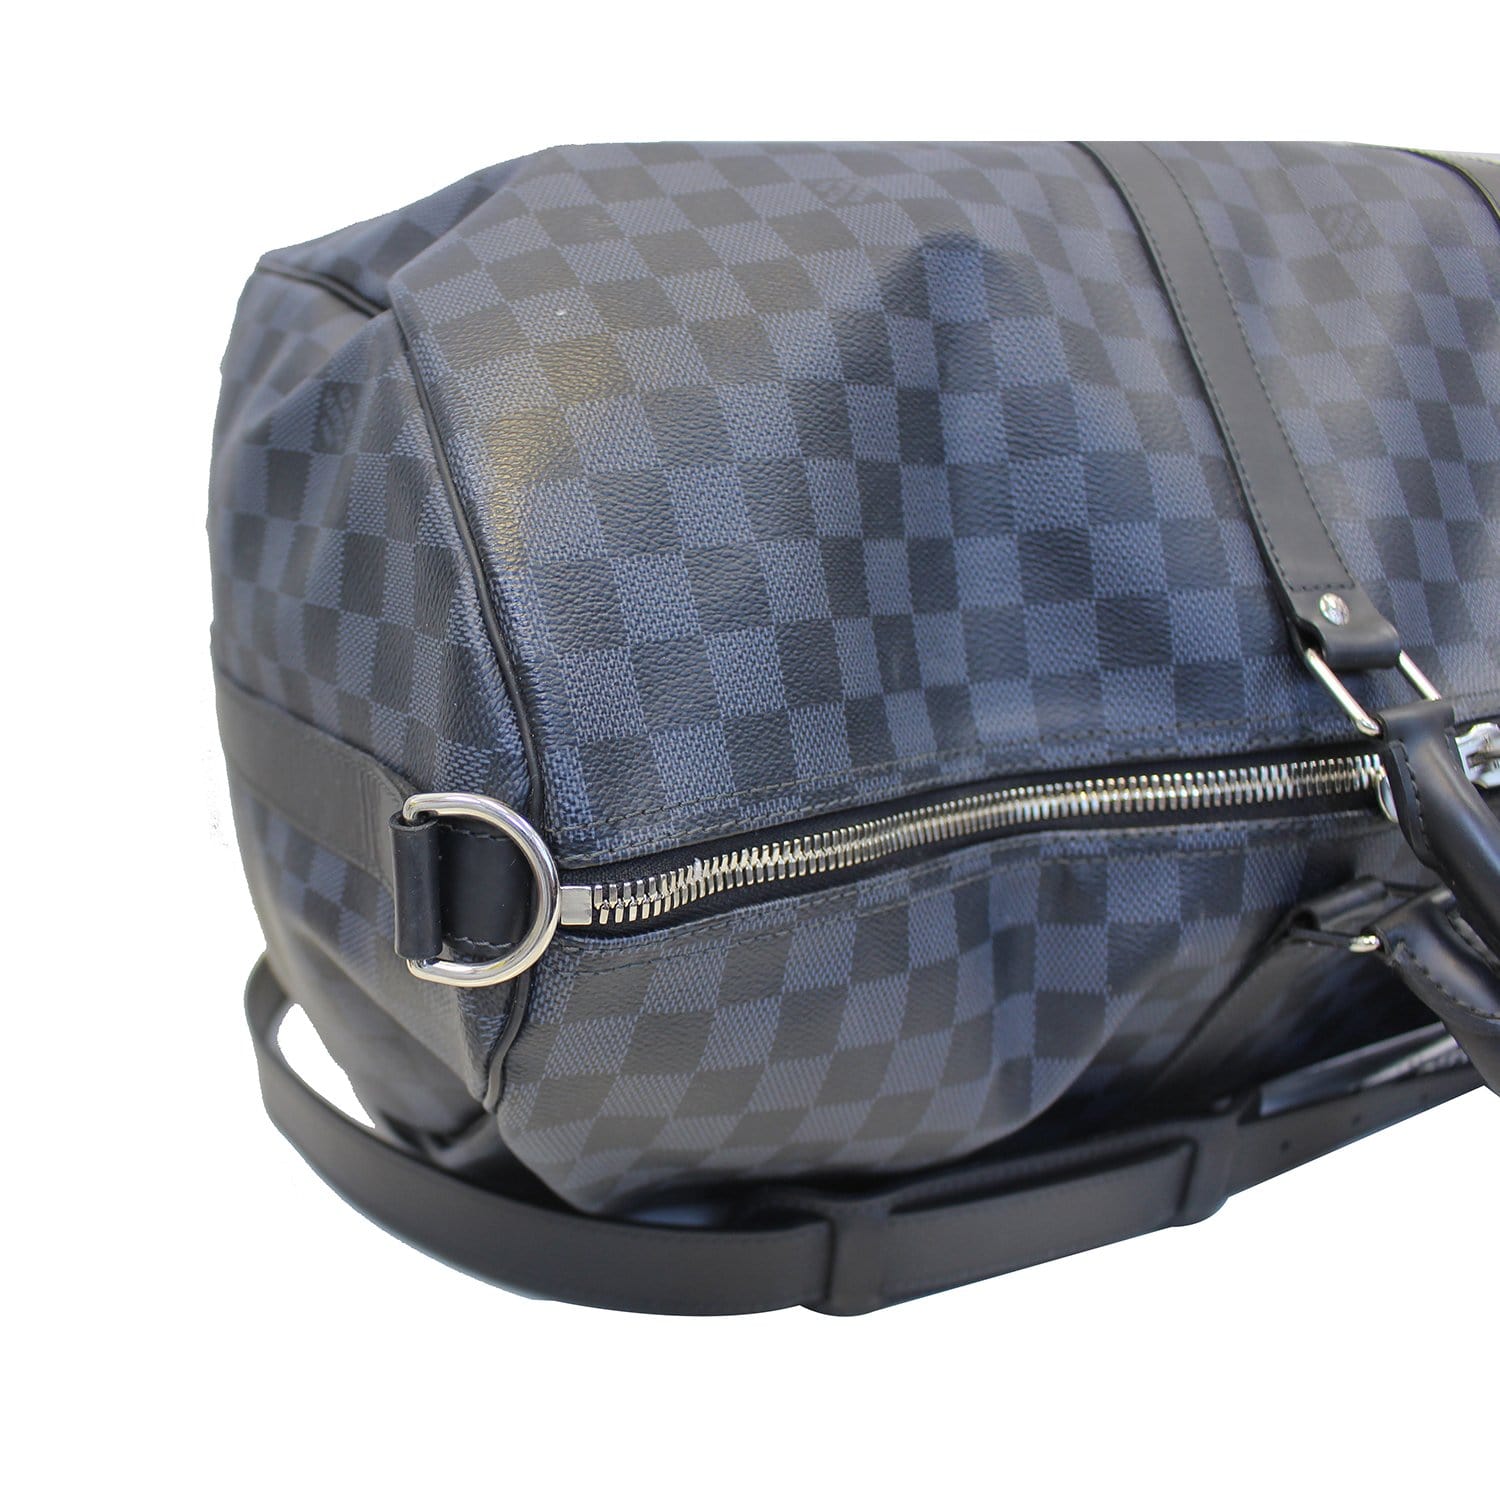 Louis Vuitton Keepall 55 Damier Cobalt Duffle Luggage